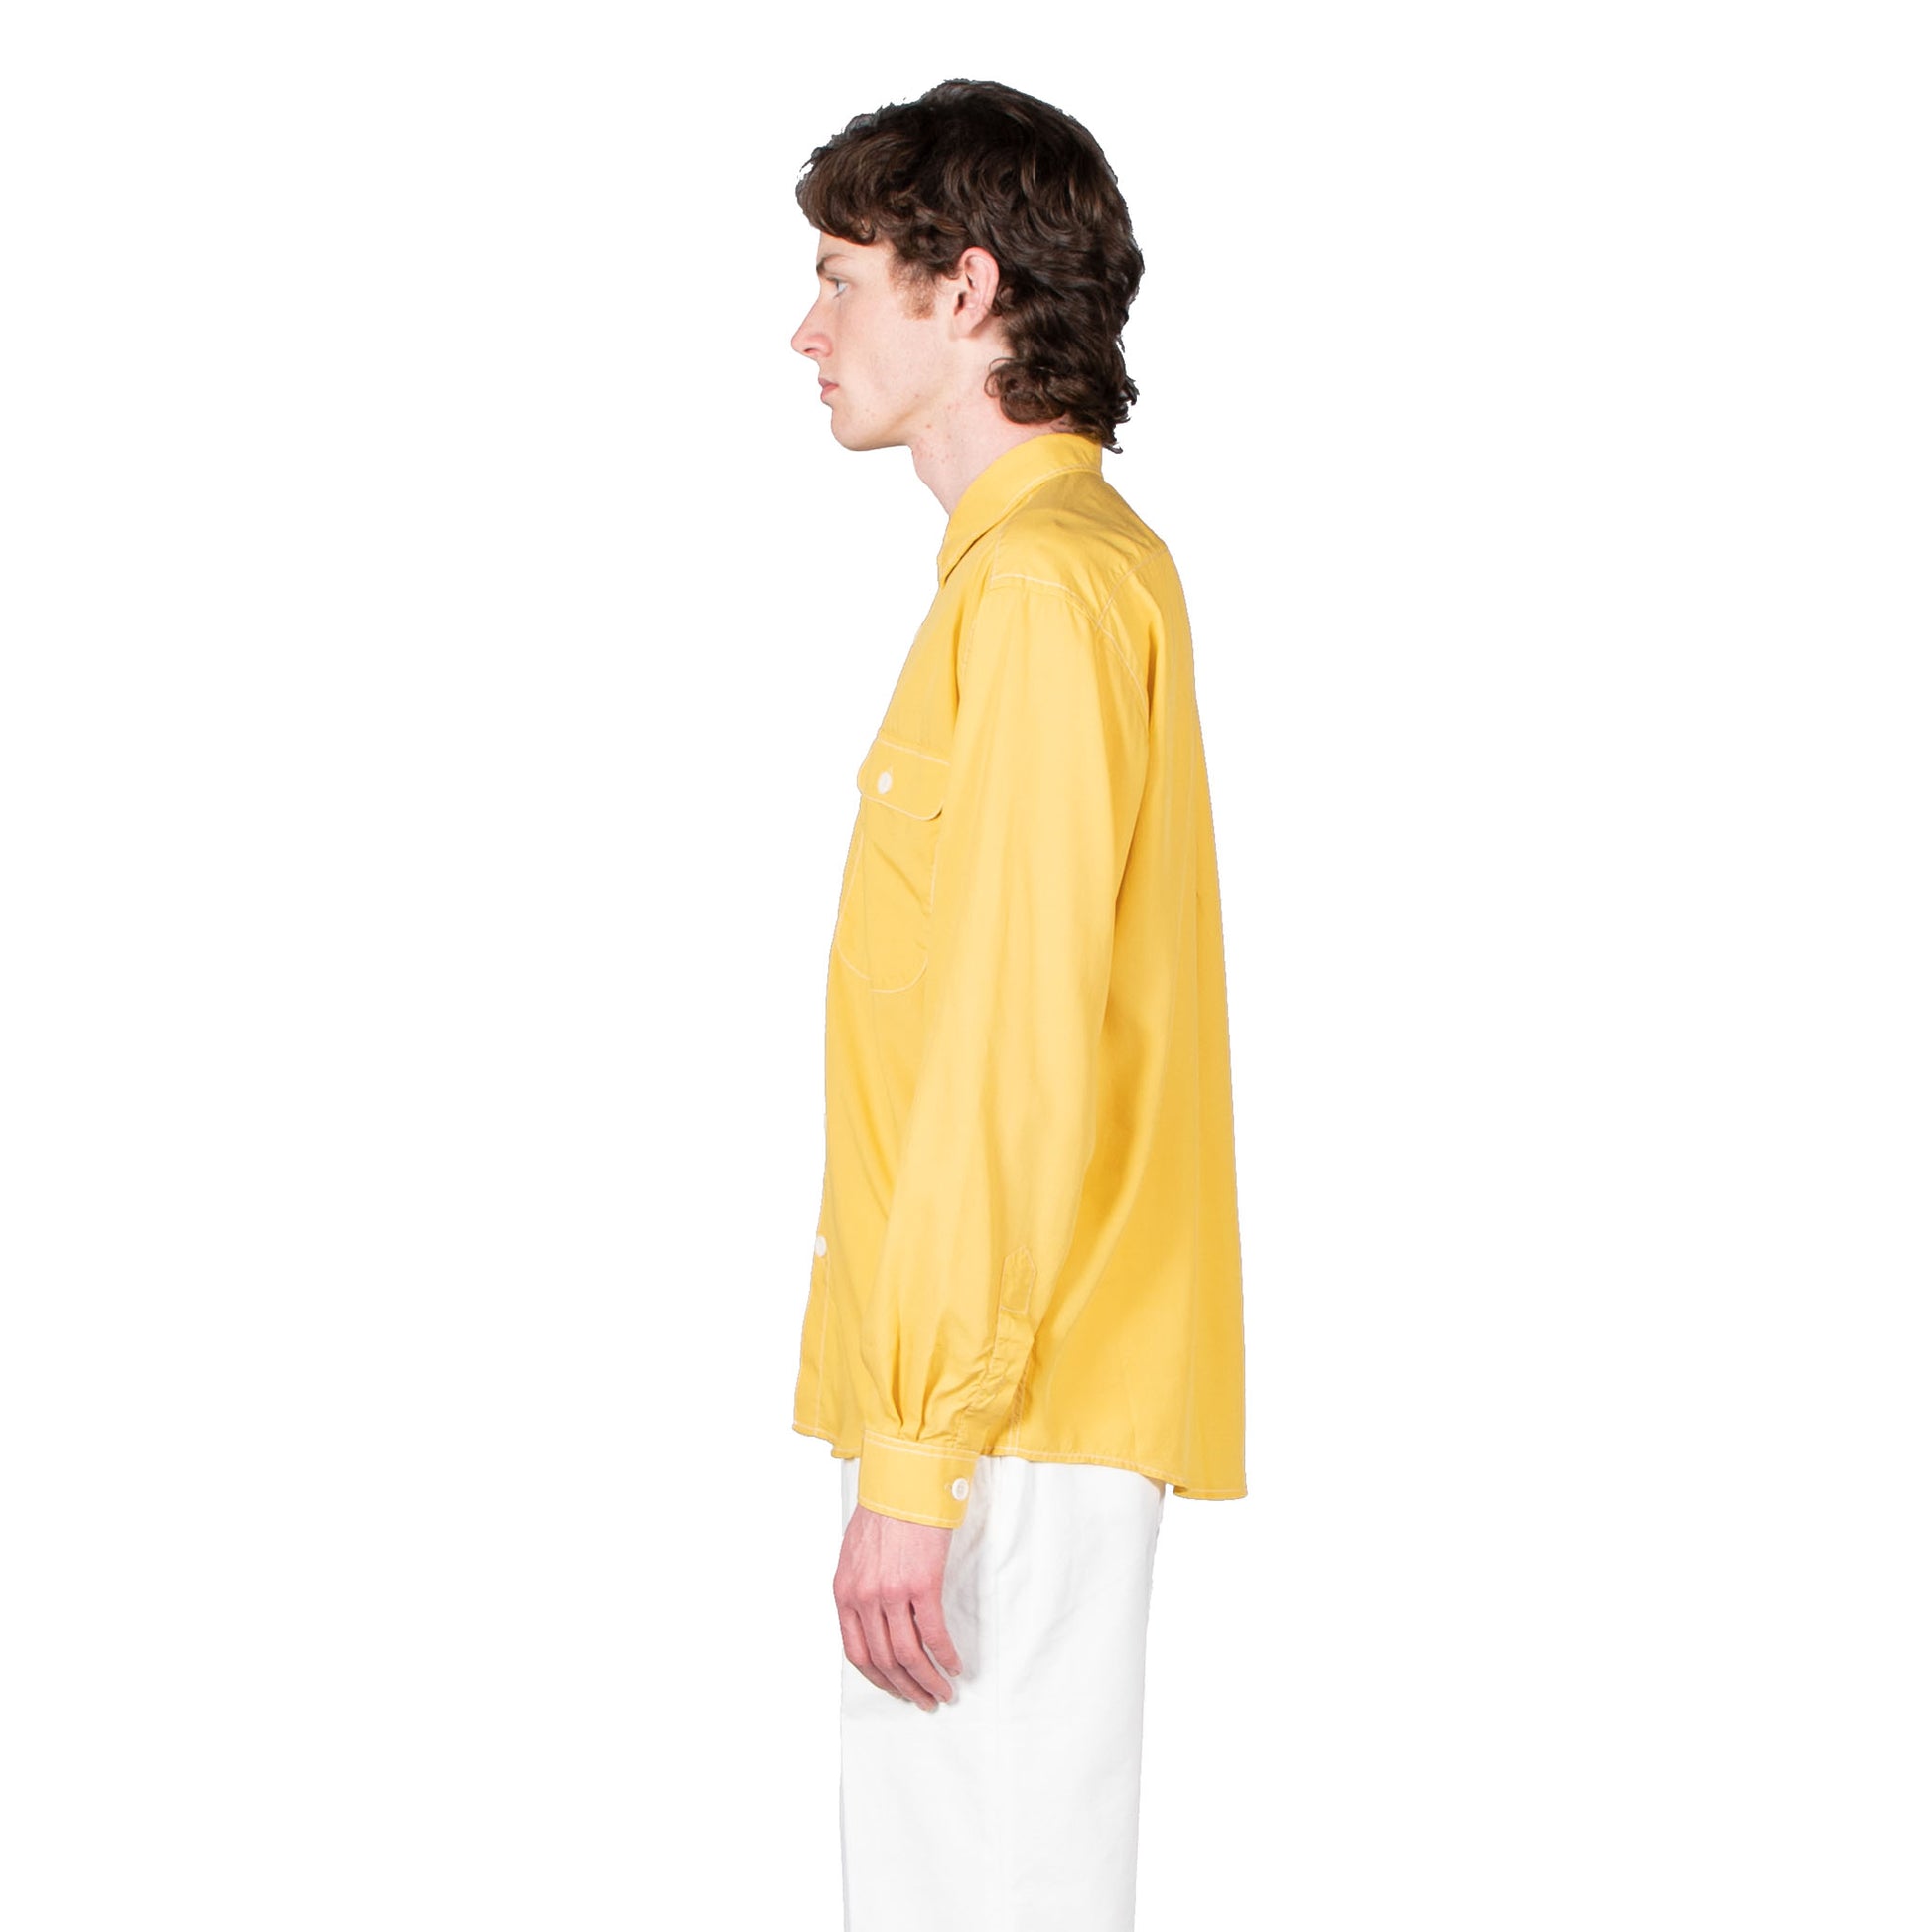 Shop Schnayderman's shirt online boxy tencel yellow